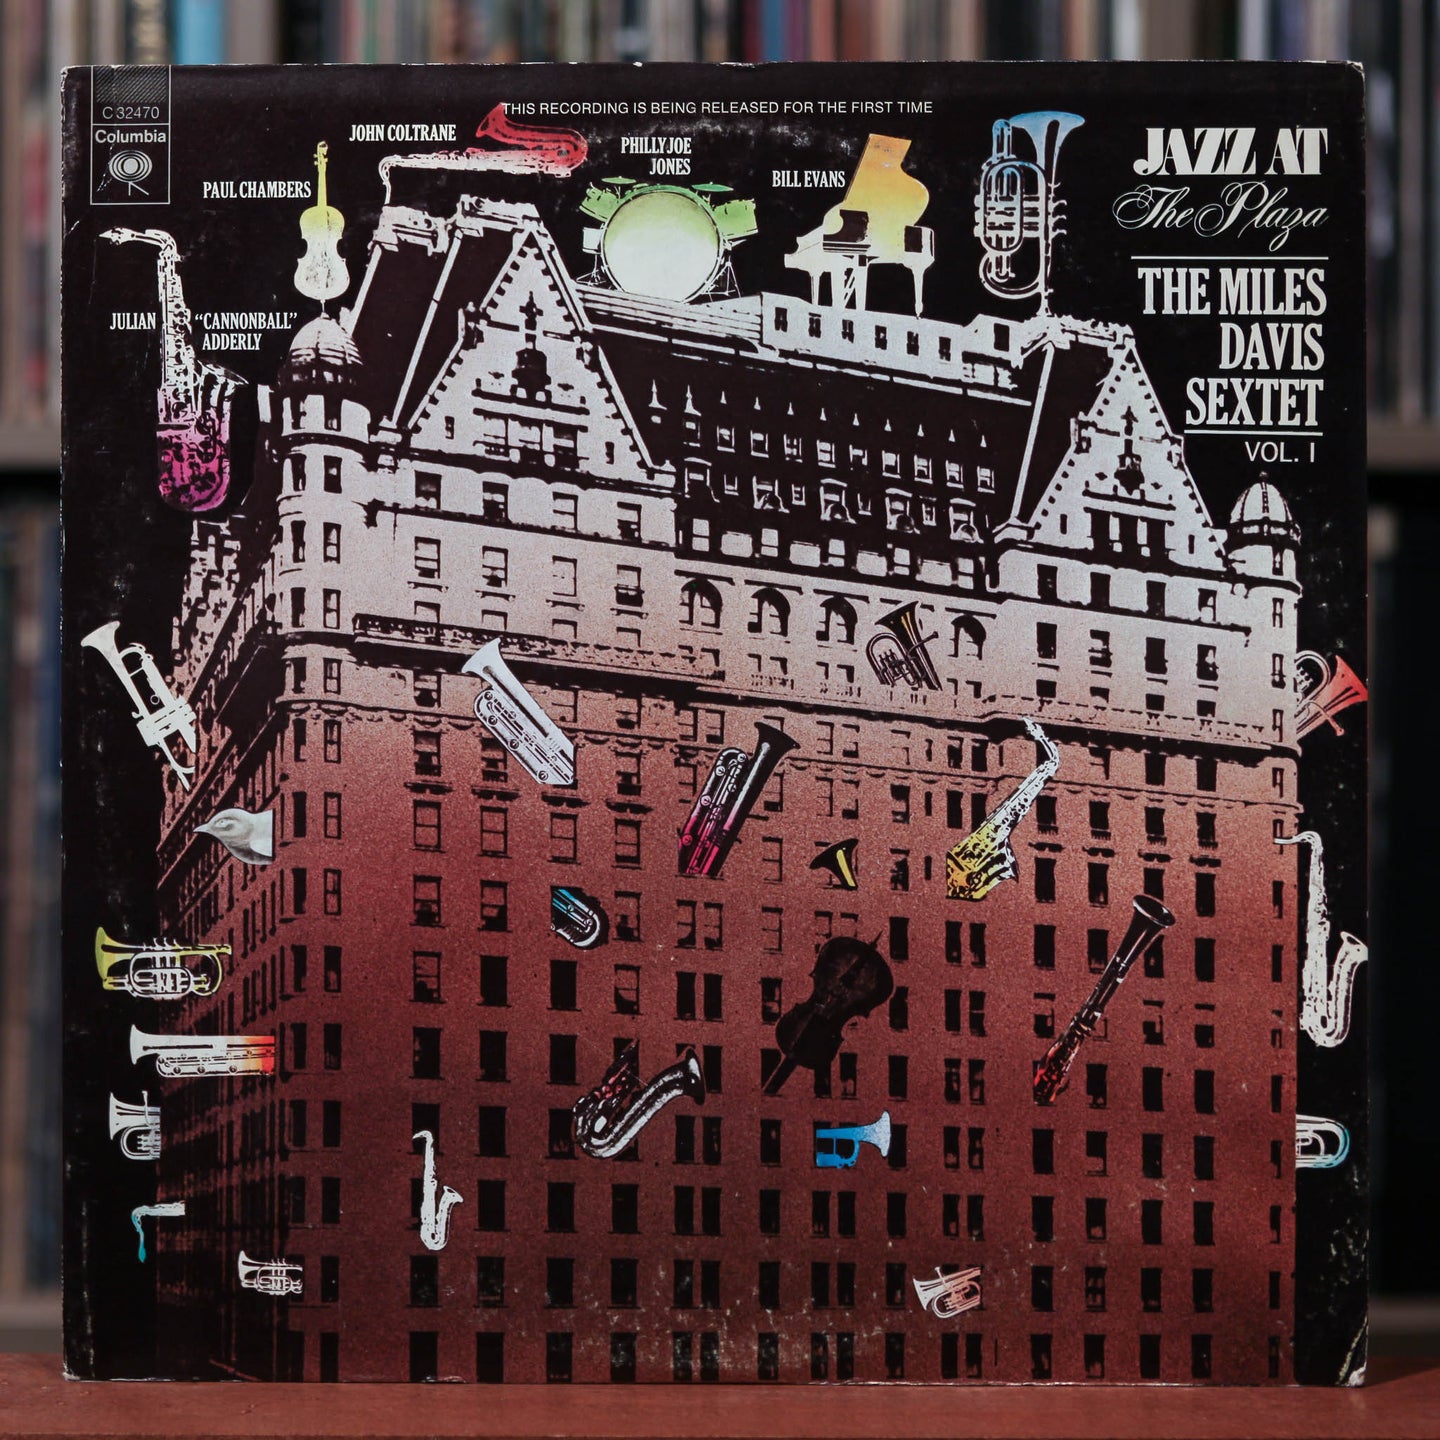 Miles Davis Sextet - Jazz At The Plaza Volume 1 - 1973 Columbia, VG+/VG+